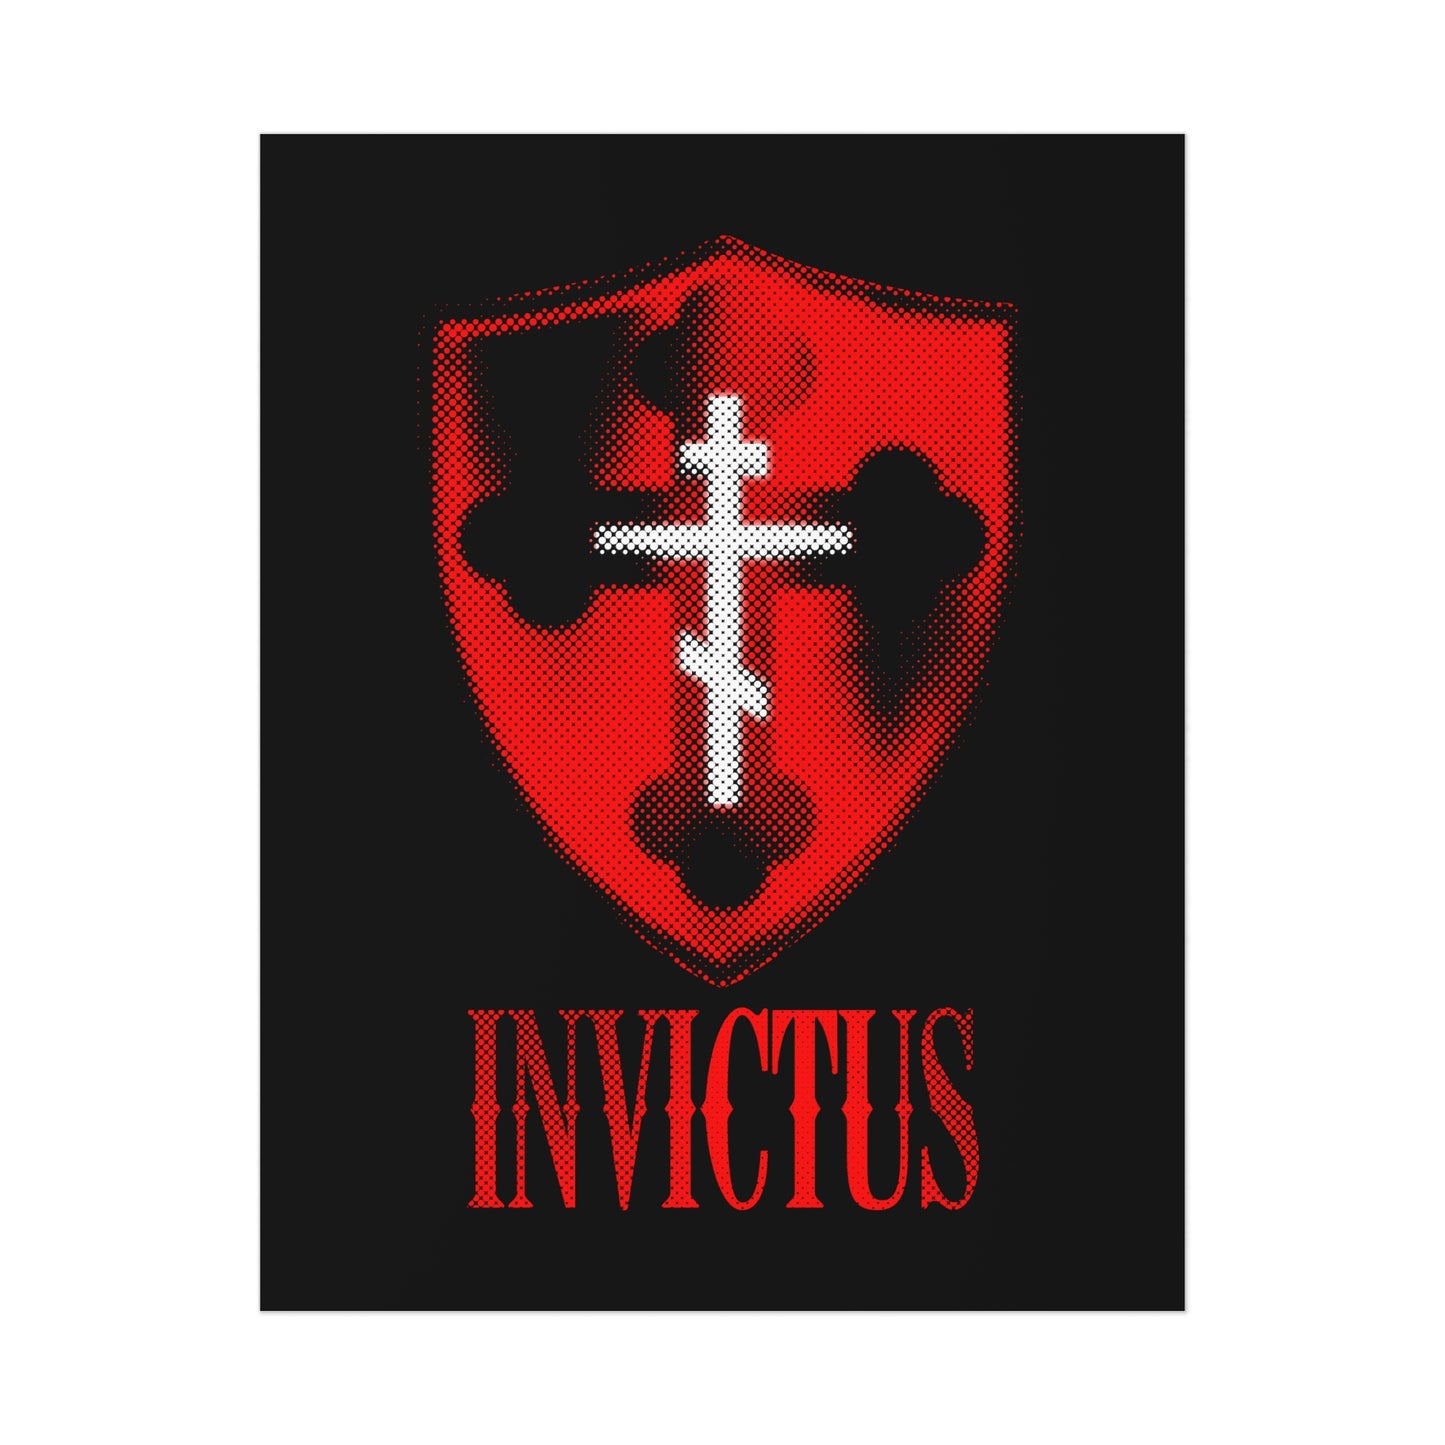 Invictus No. 1a | Orthodox Christian Art Poster